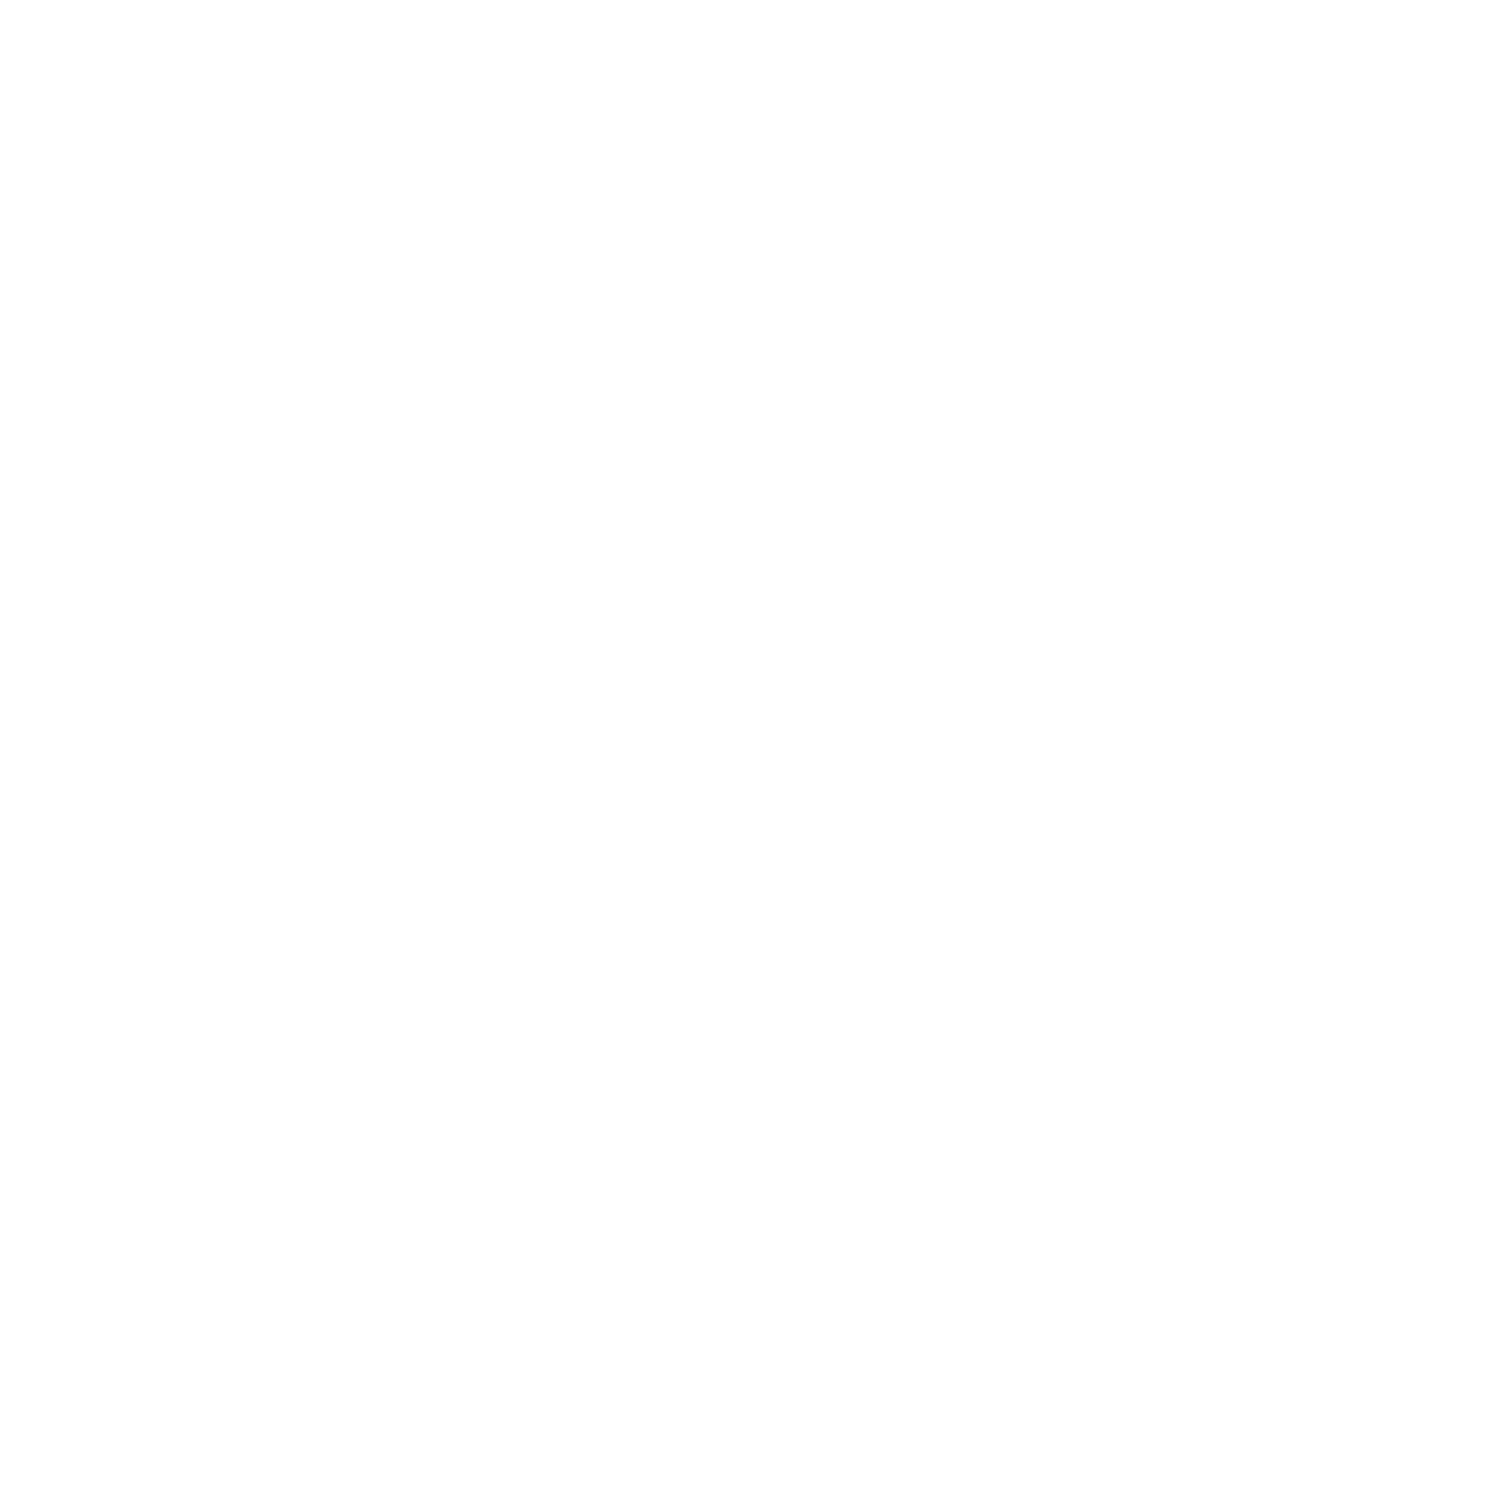 Caan Rose Estates Ltd - Slough : Letting agents in Slough Berkshire